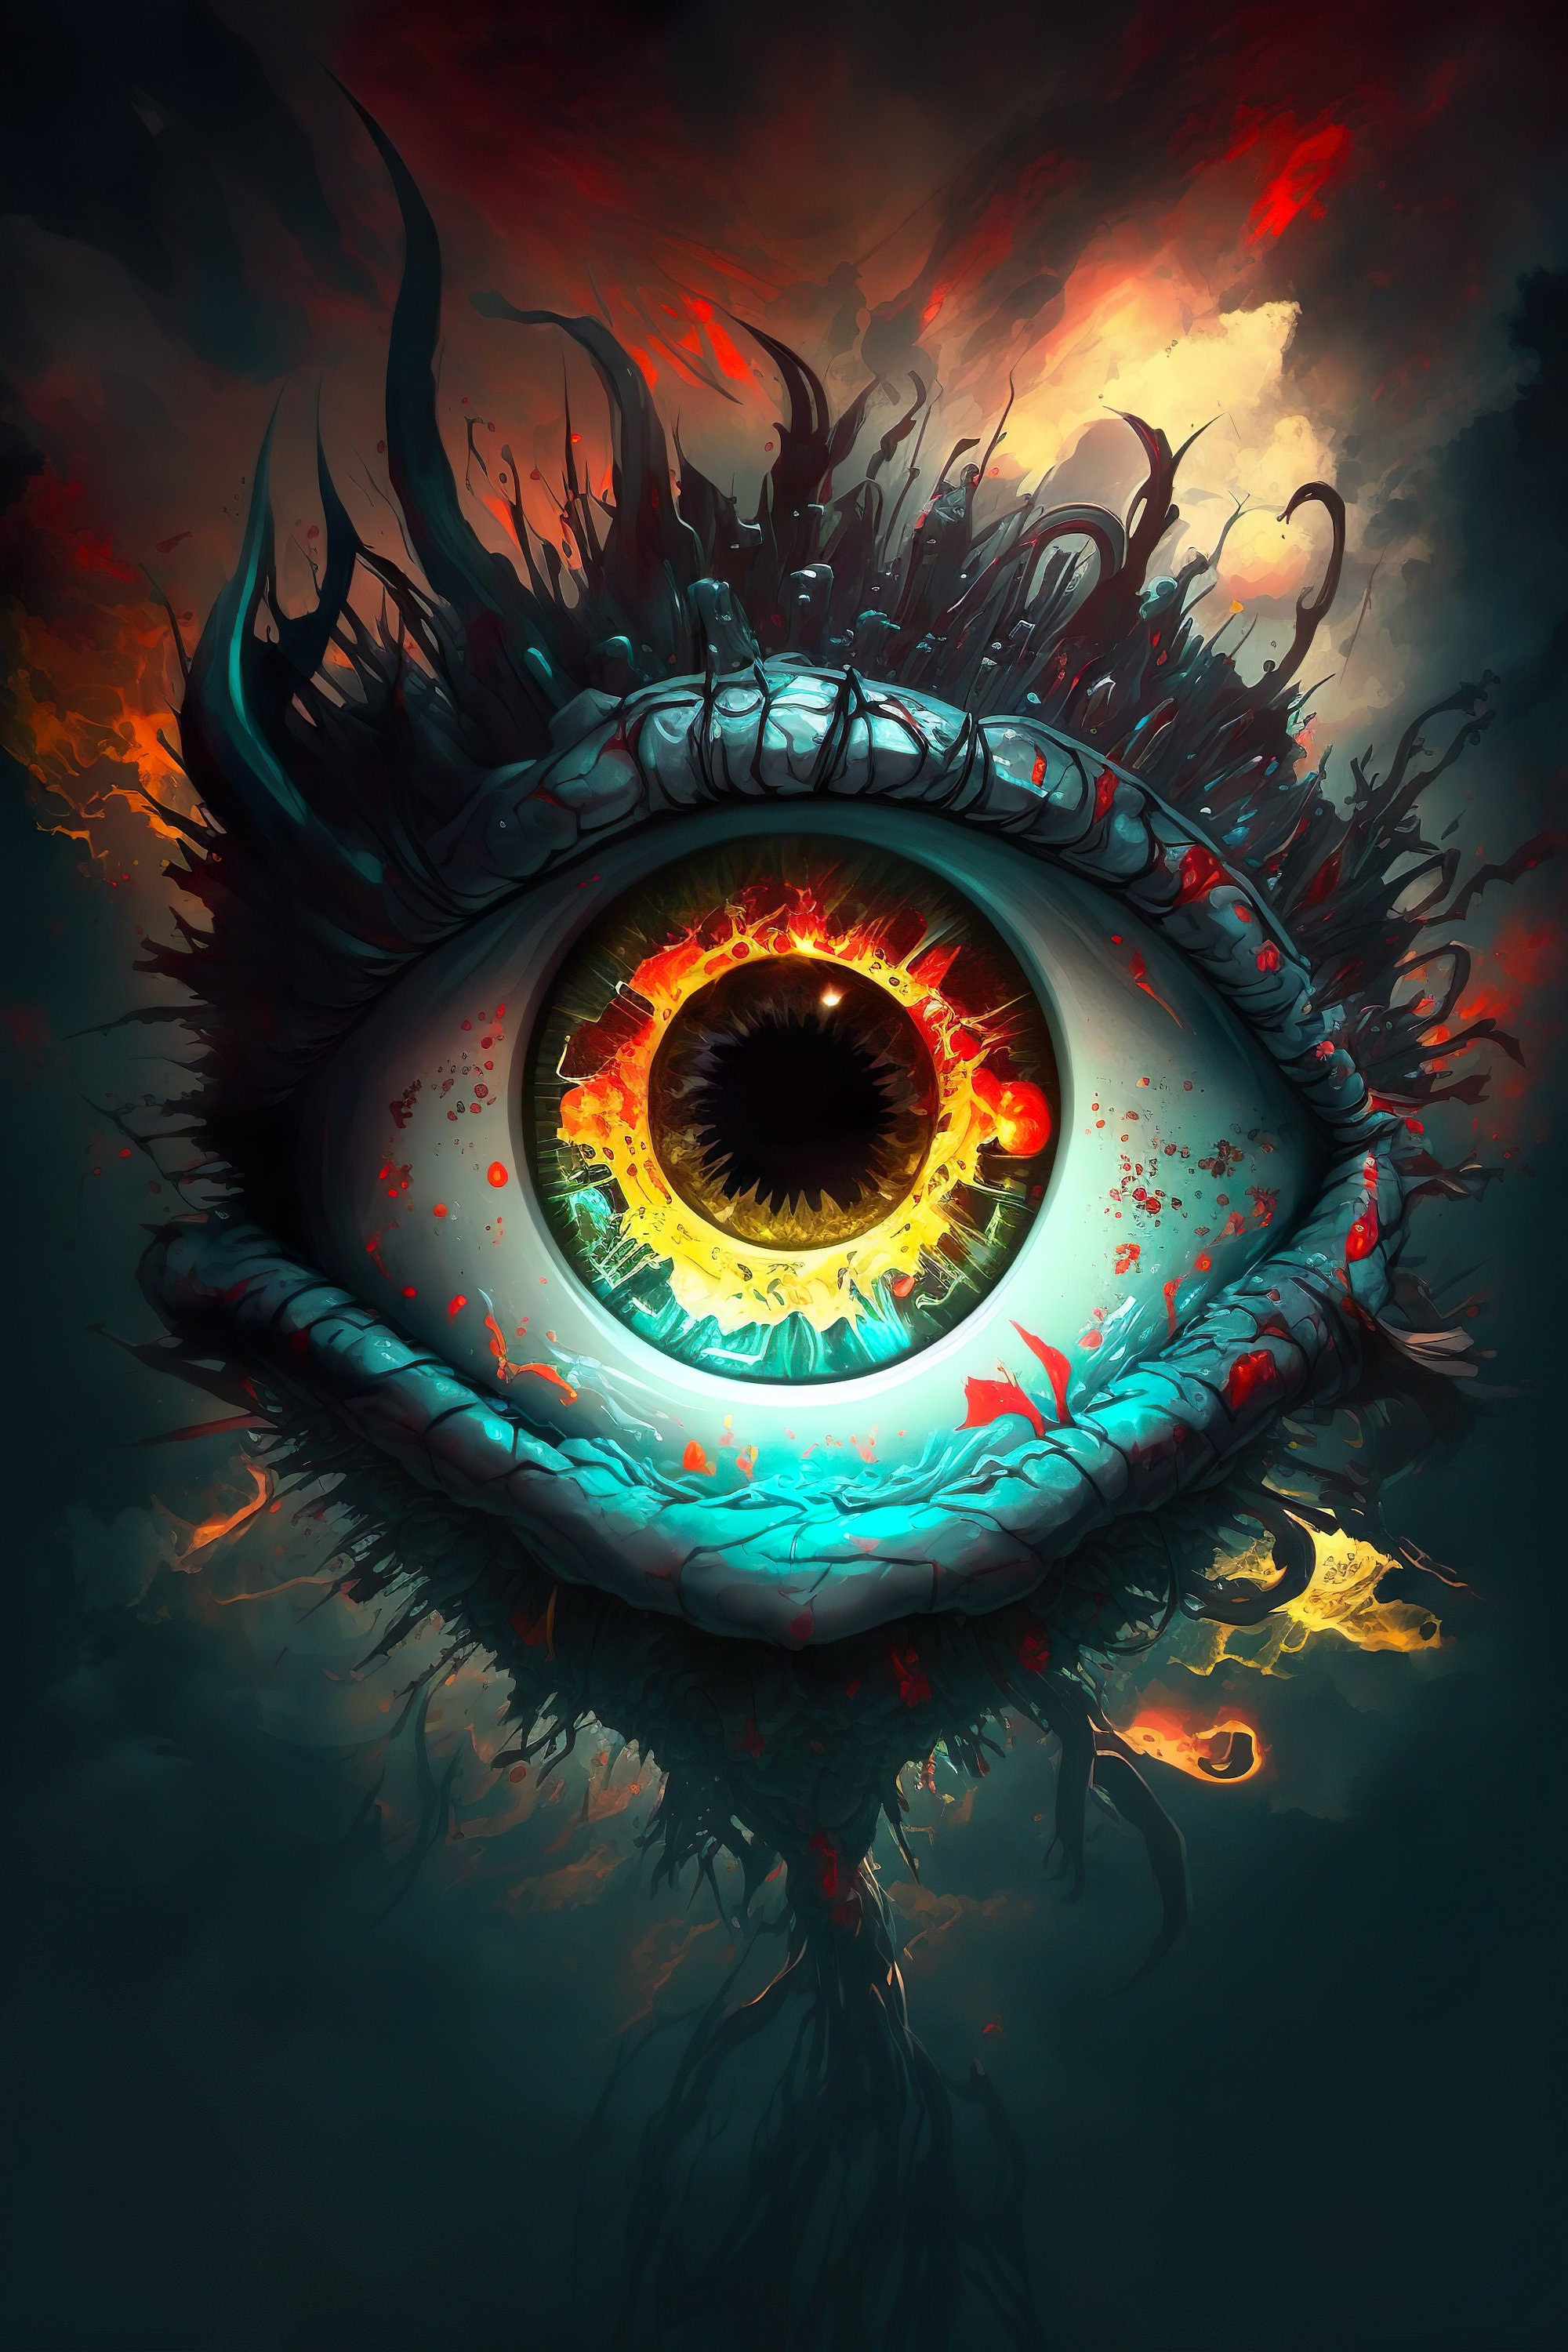 Weirdcore Art - Multi Eyes by ainight on DeviantArt